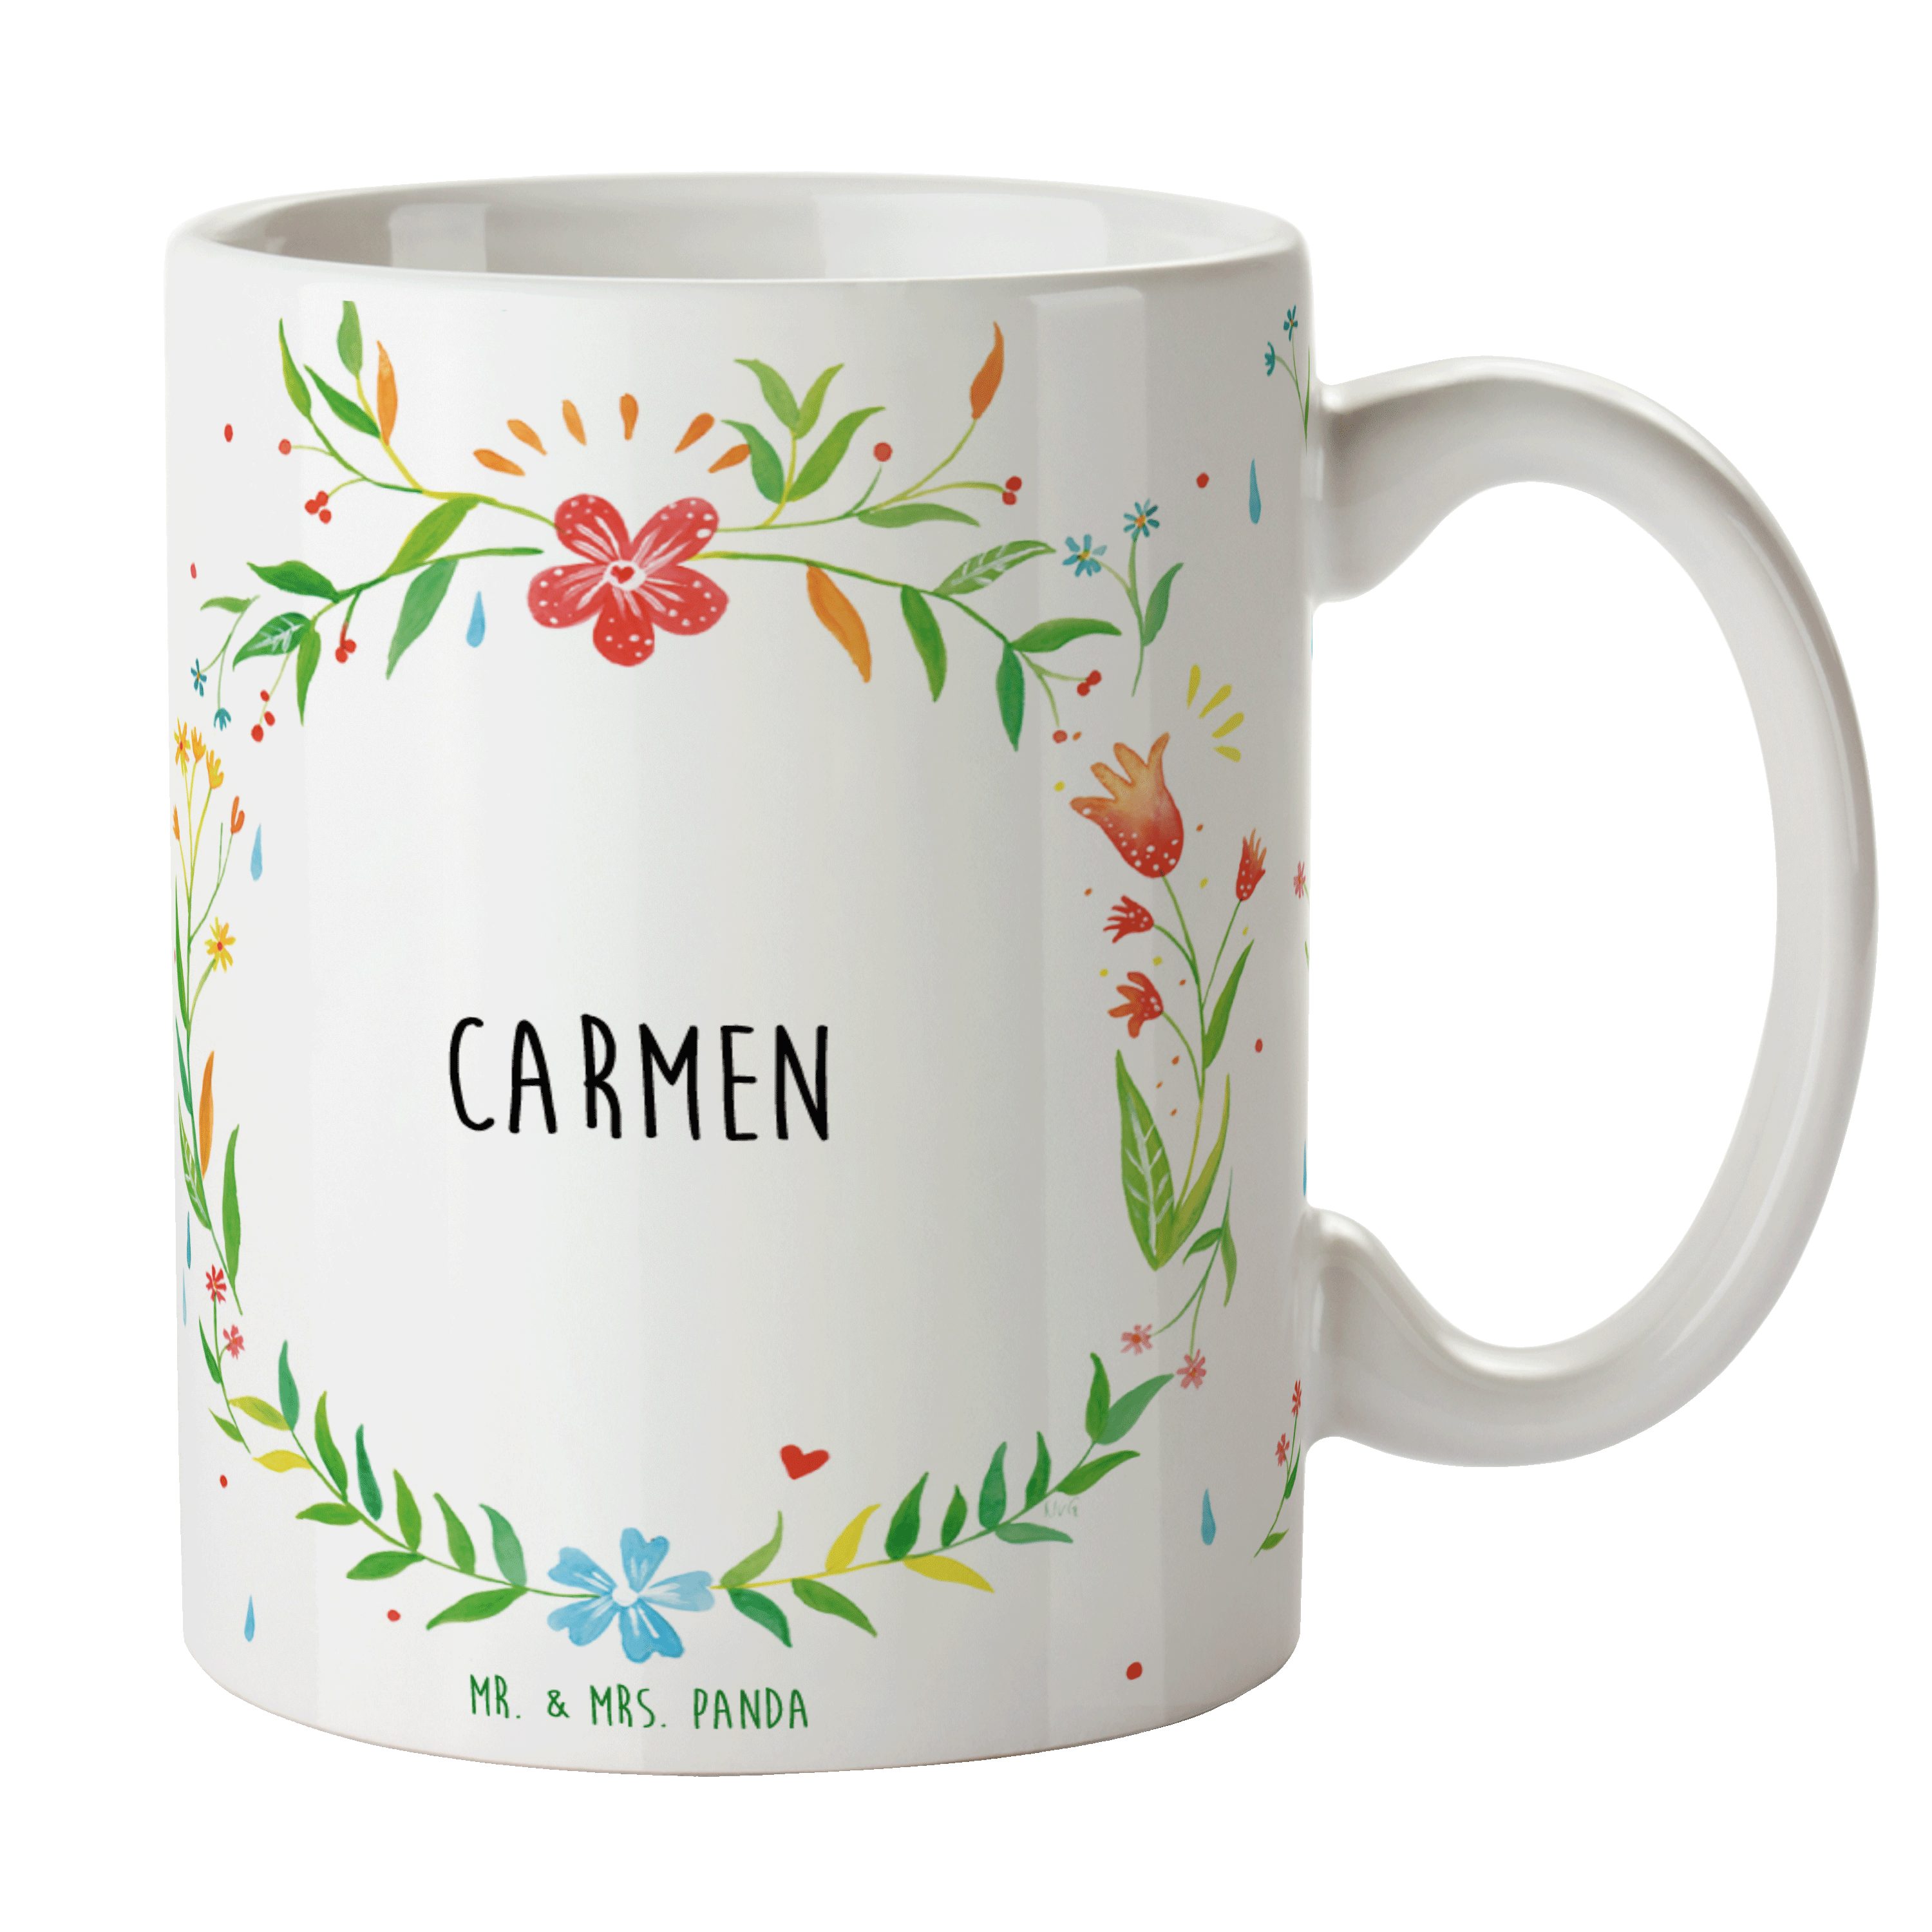 Mr. & Mrs. Panda Tasse Carmen - Geschenk, Teetasse, Kaffeebecher, Geschenk Tasse, Tasse Moti, Keramik